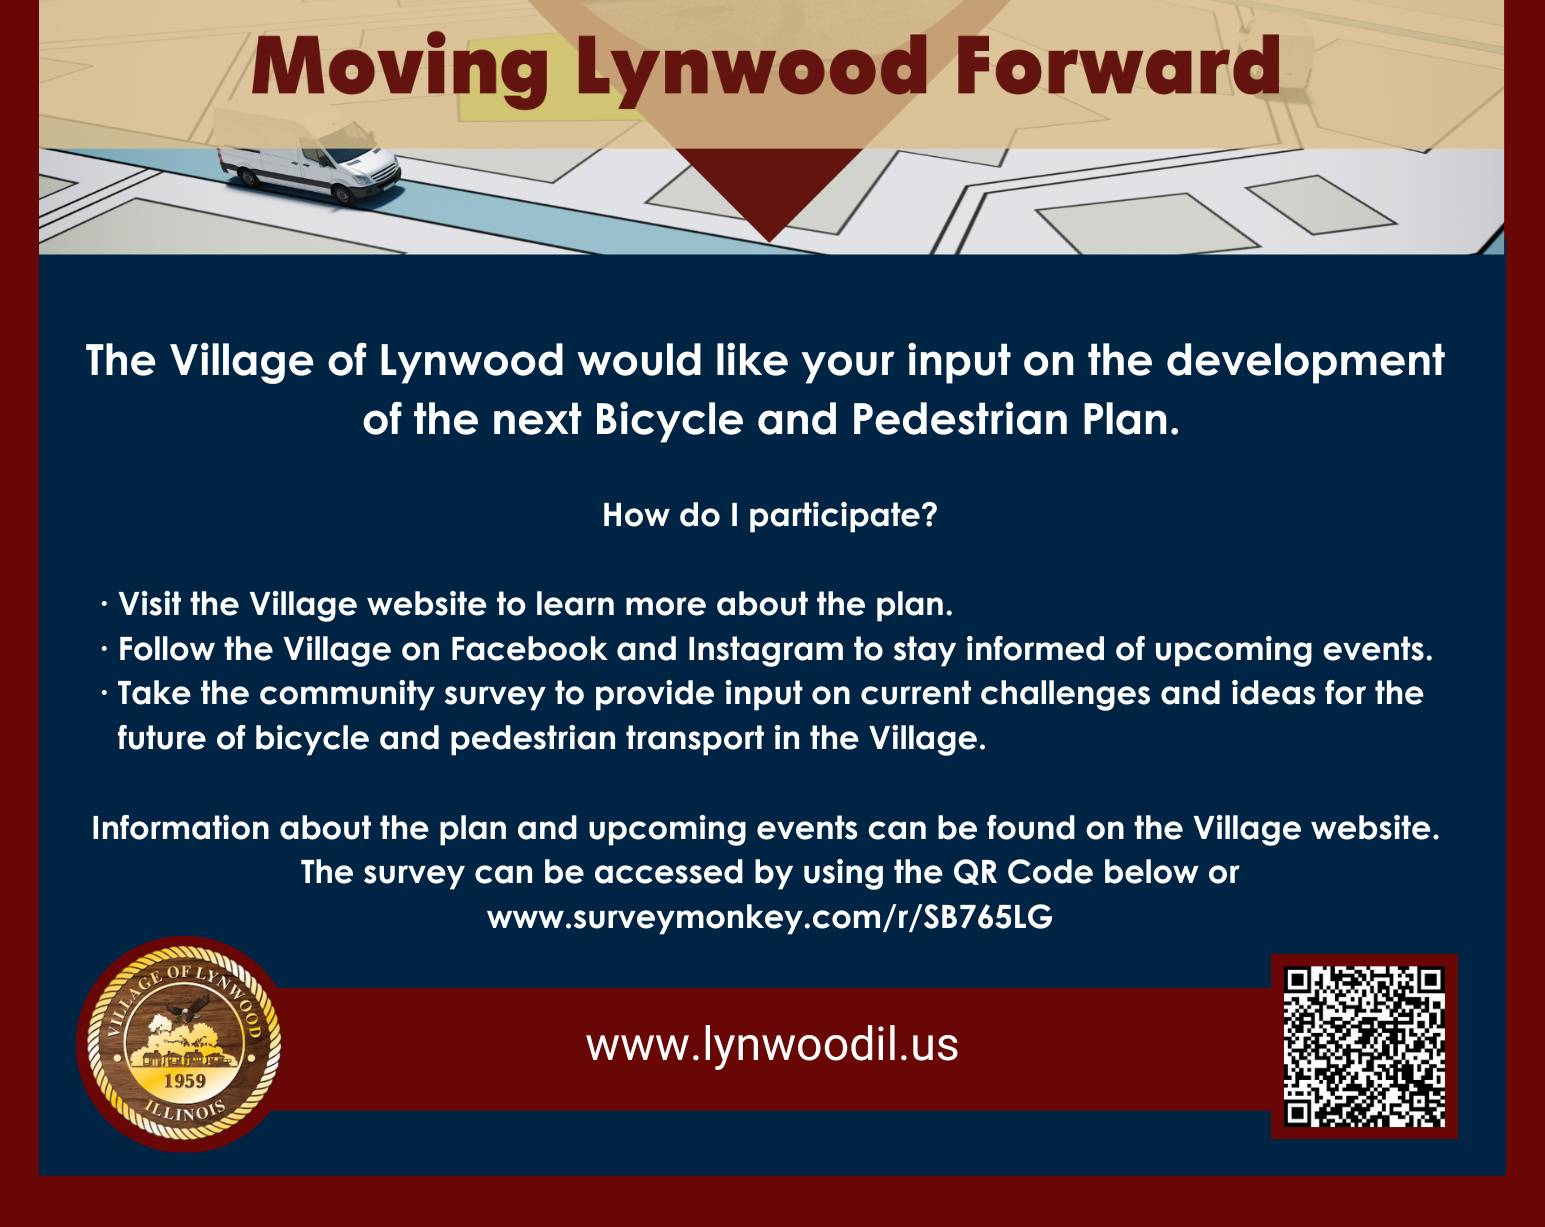 Moving Lynwood Forward Flyer for Website - Copy